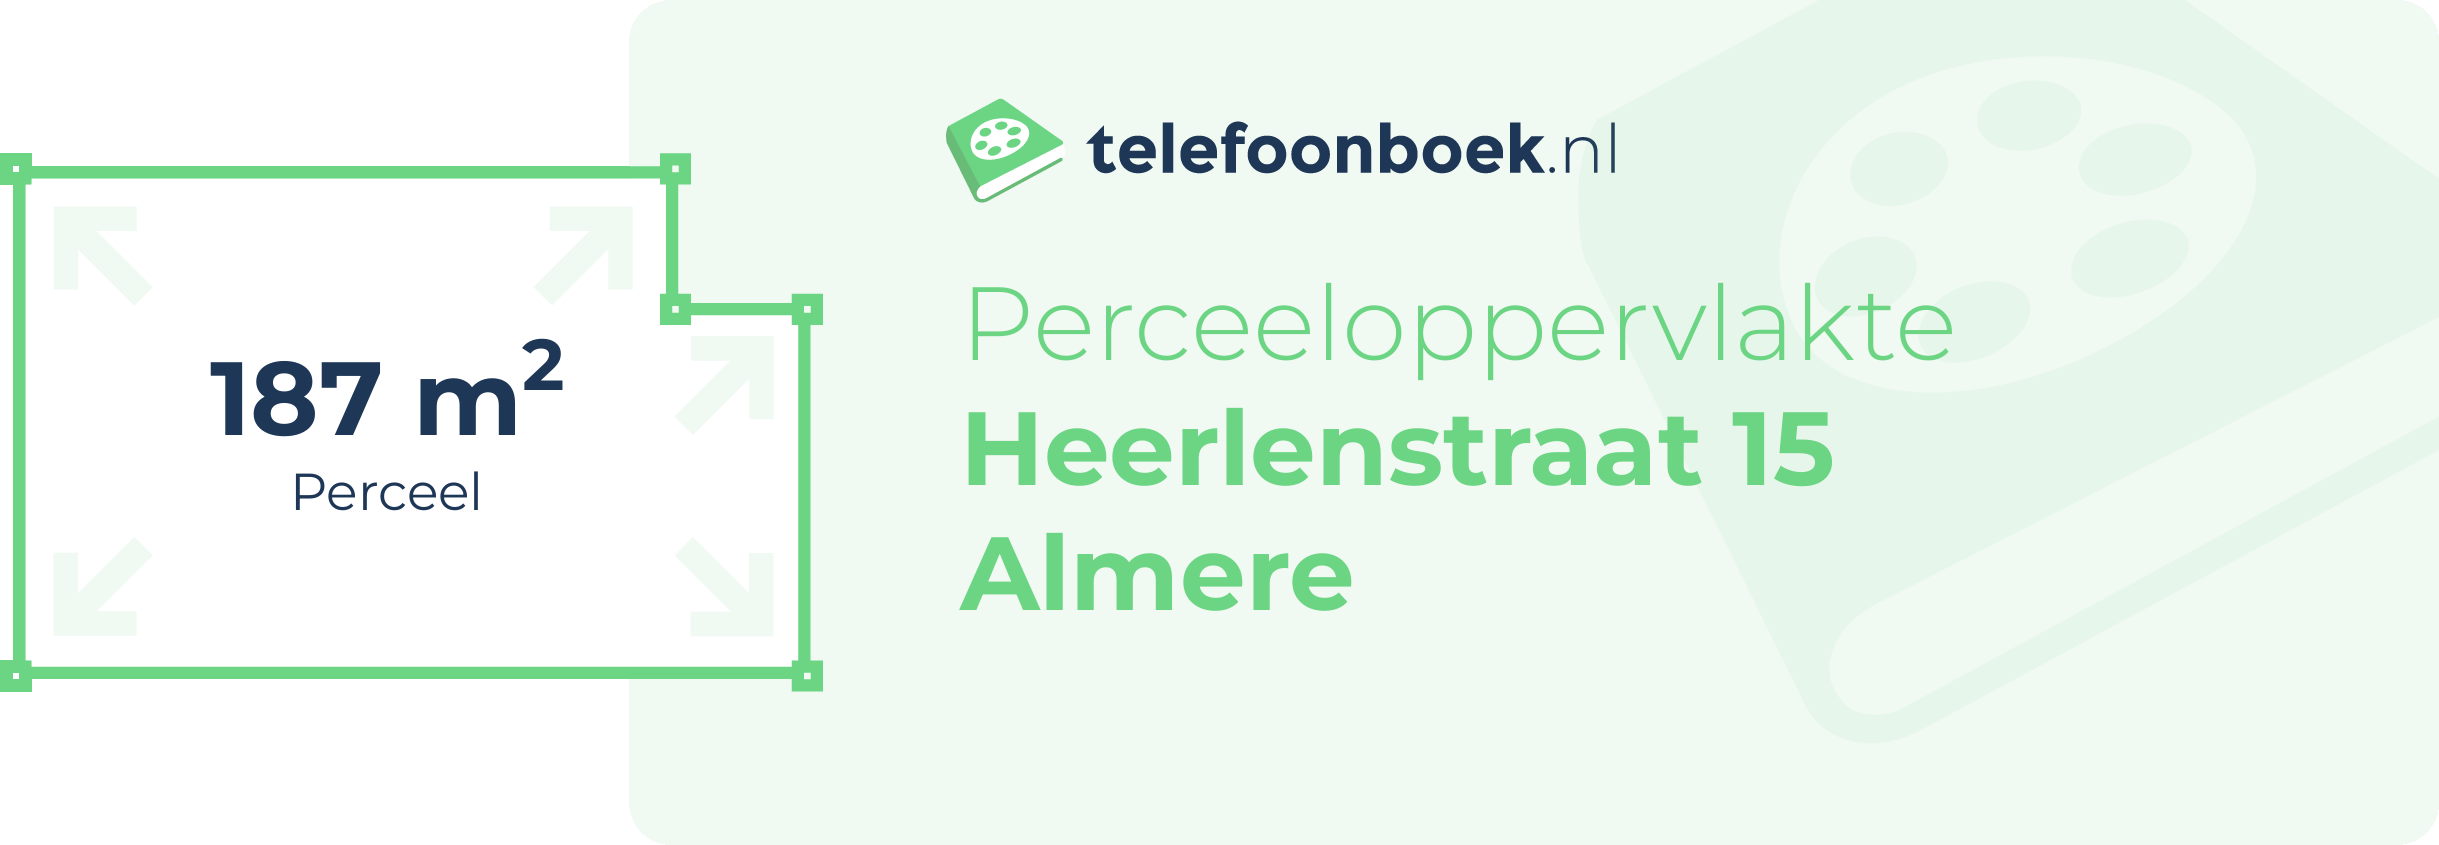 Perceeloppervlakte Heerlenstraat 15 Almere